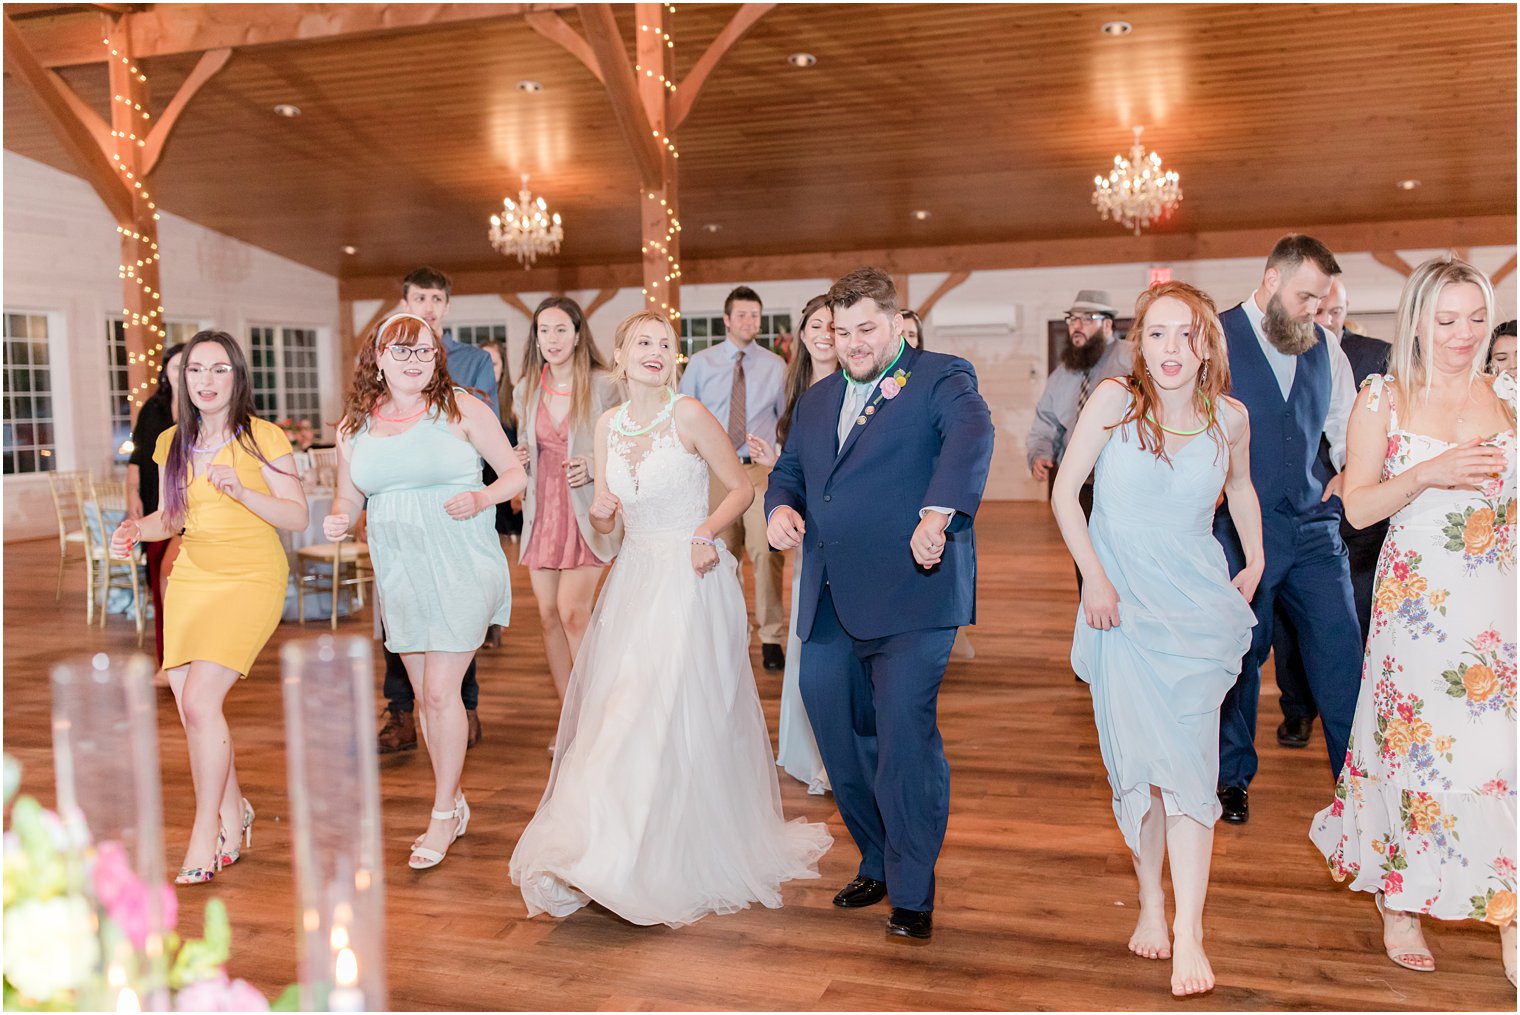 guest dance during wedding reception in Berryville VA